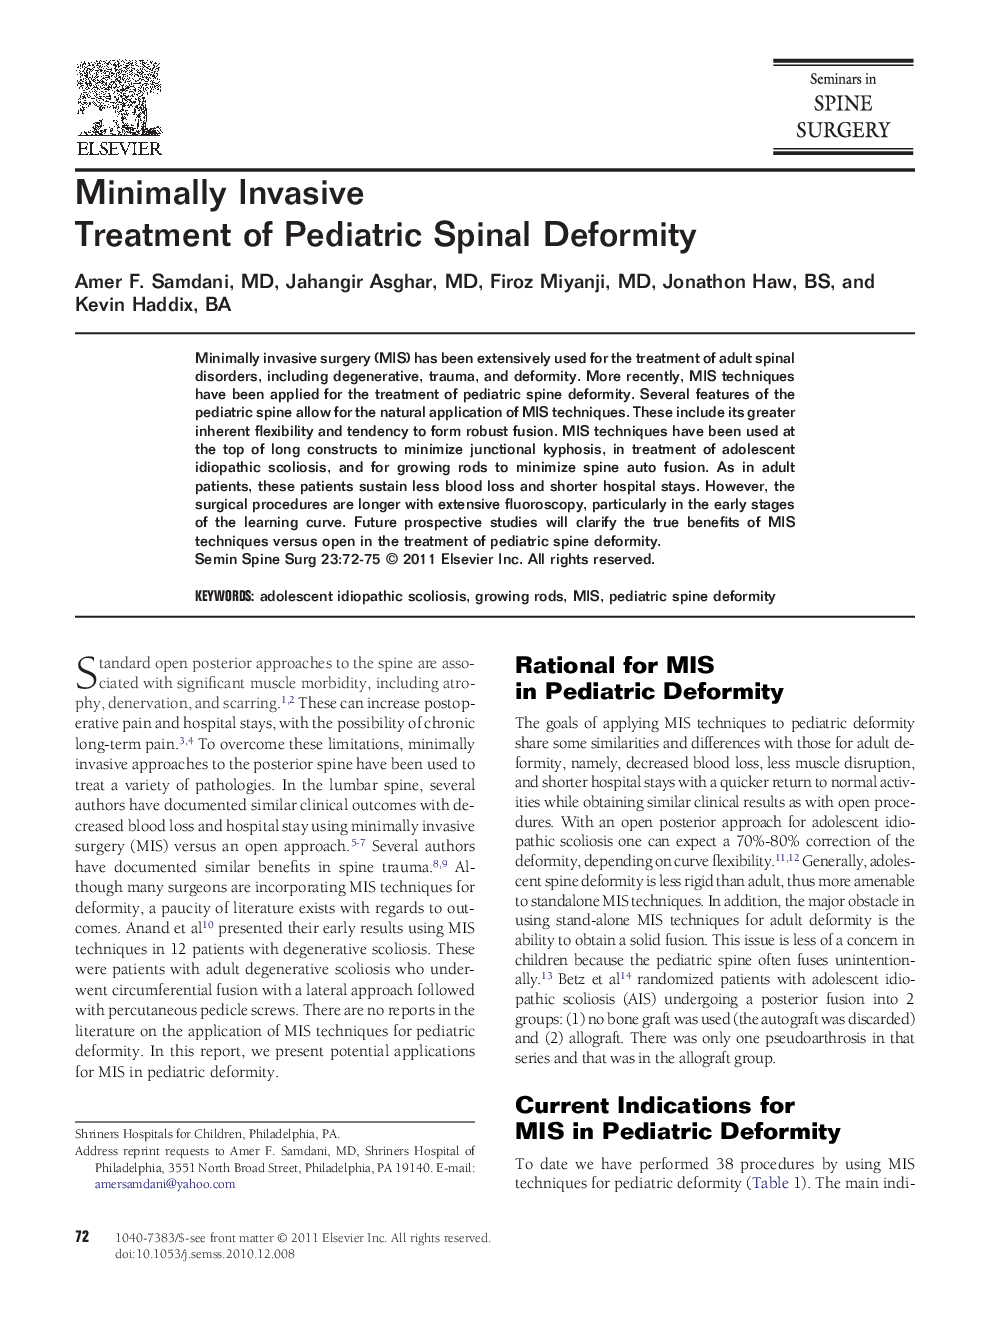 Minimally Invasive Treatment of Pediatric Spinal Deformity